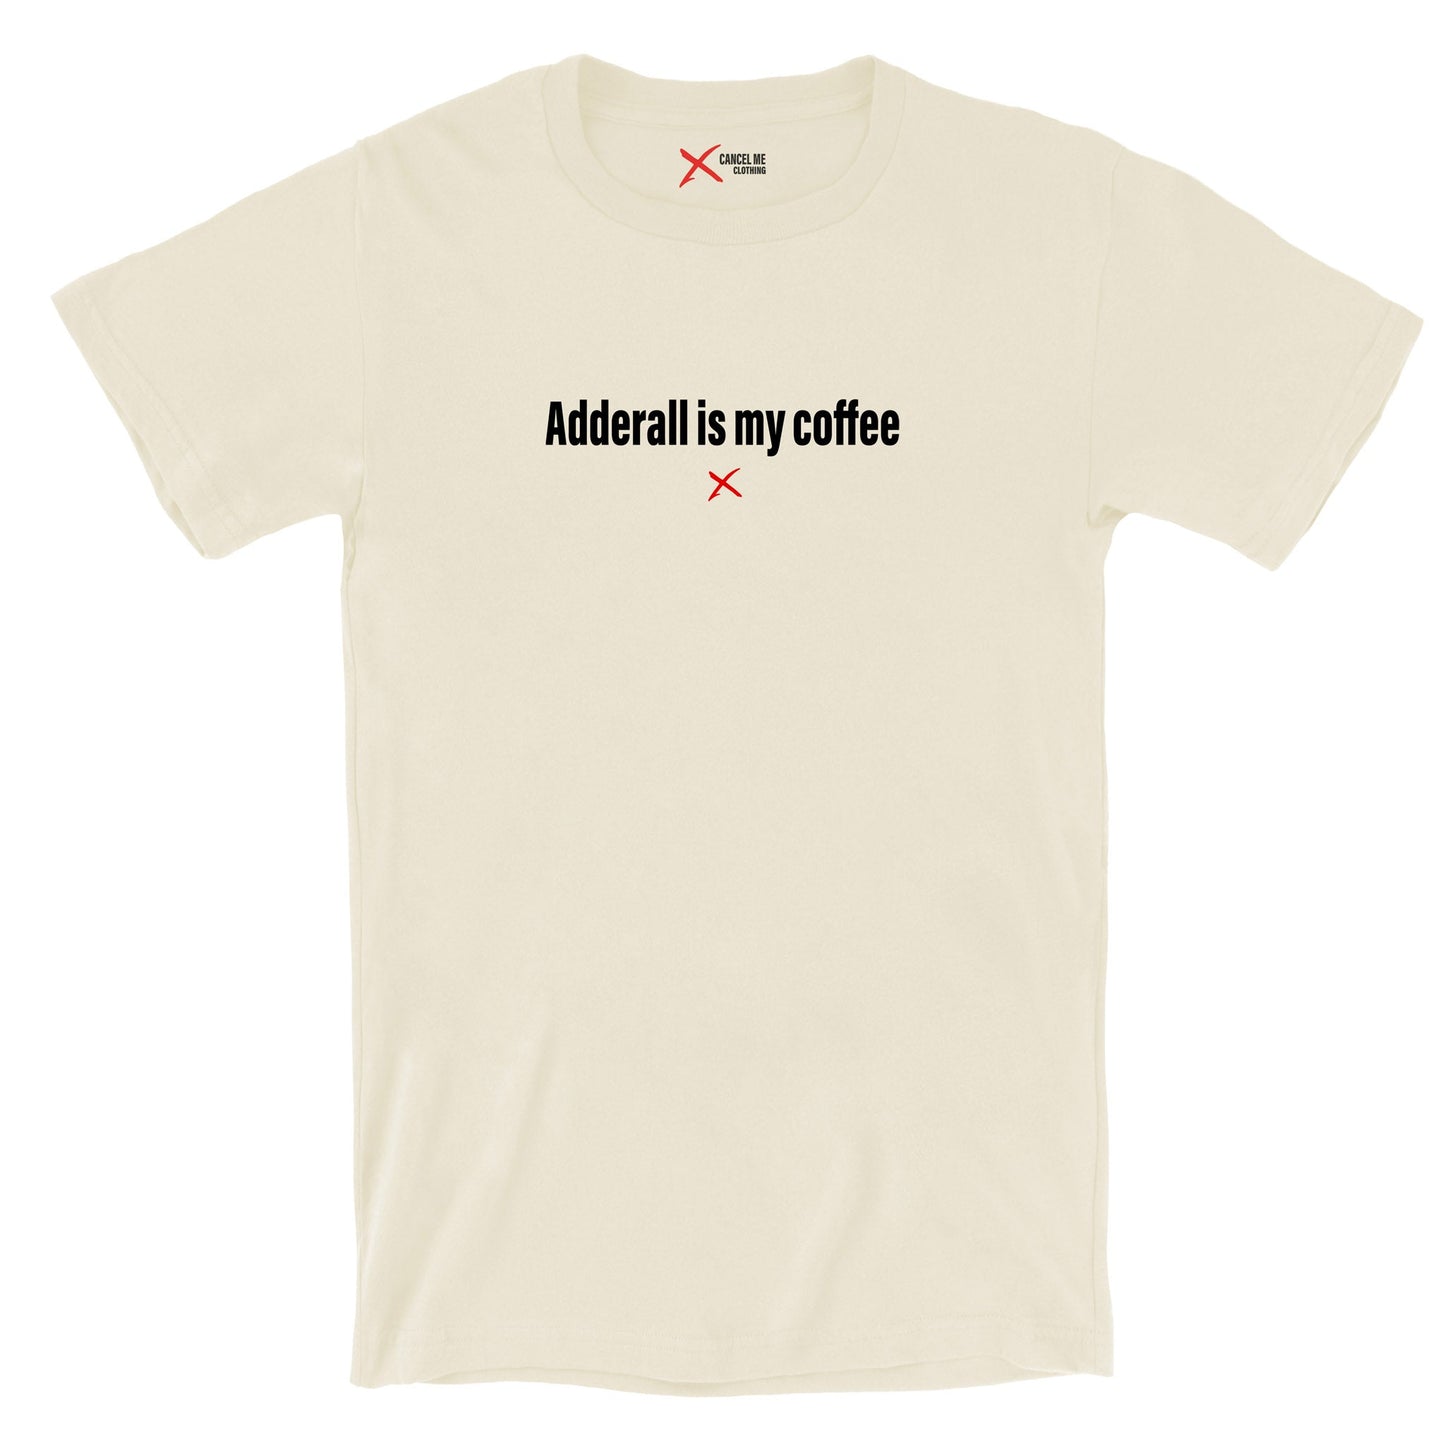 Adderall is my coffee - Shirt